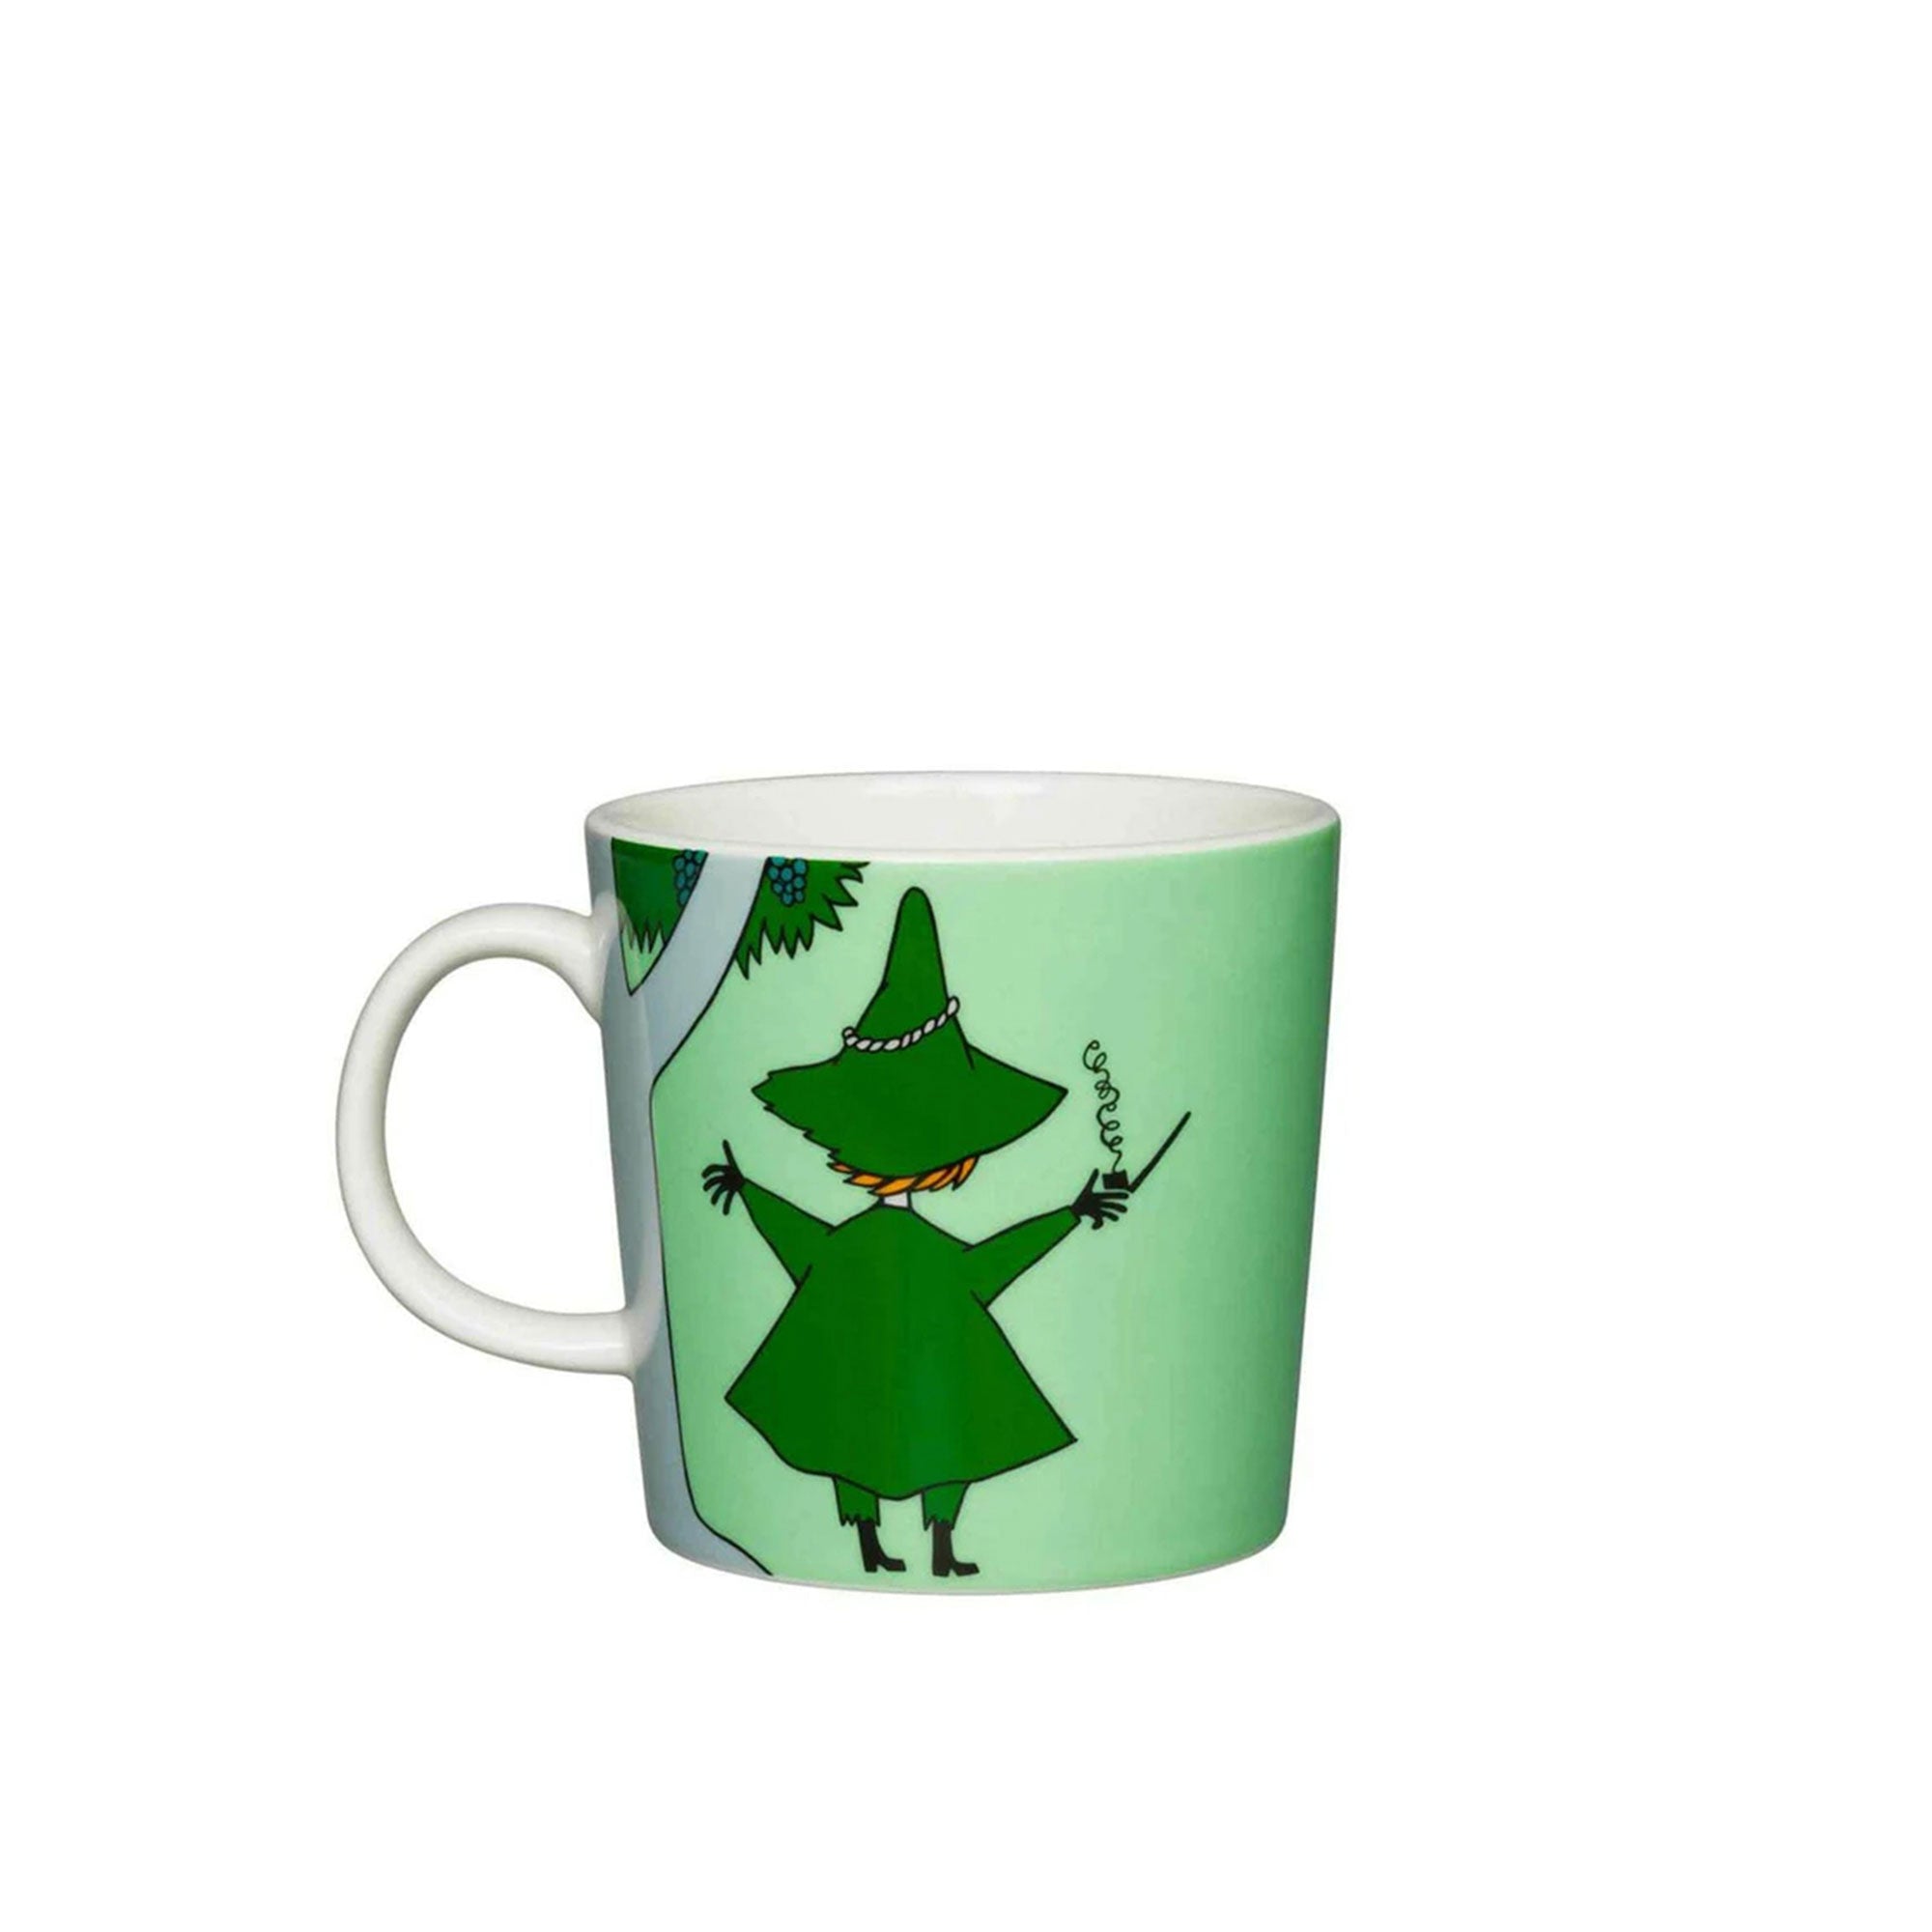 Snufkin Moomin Mug